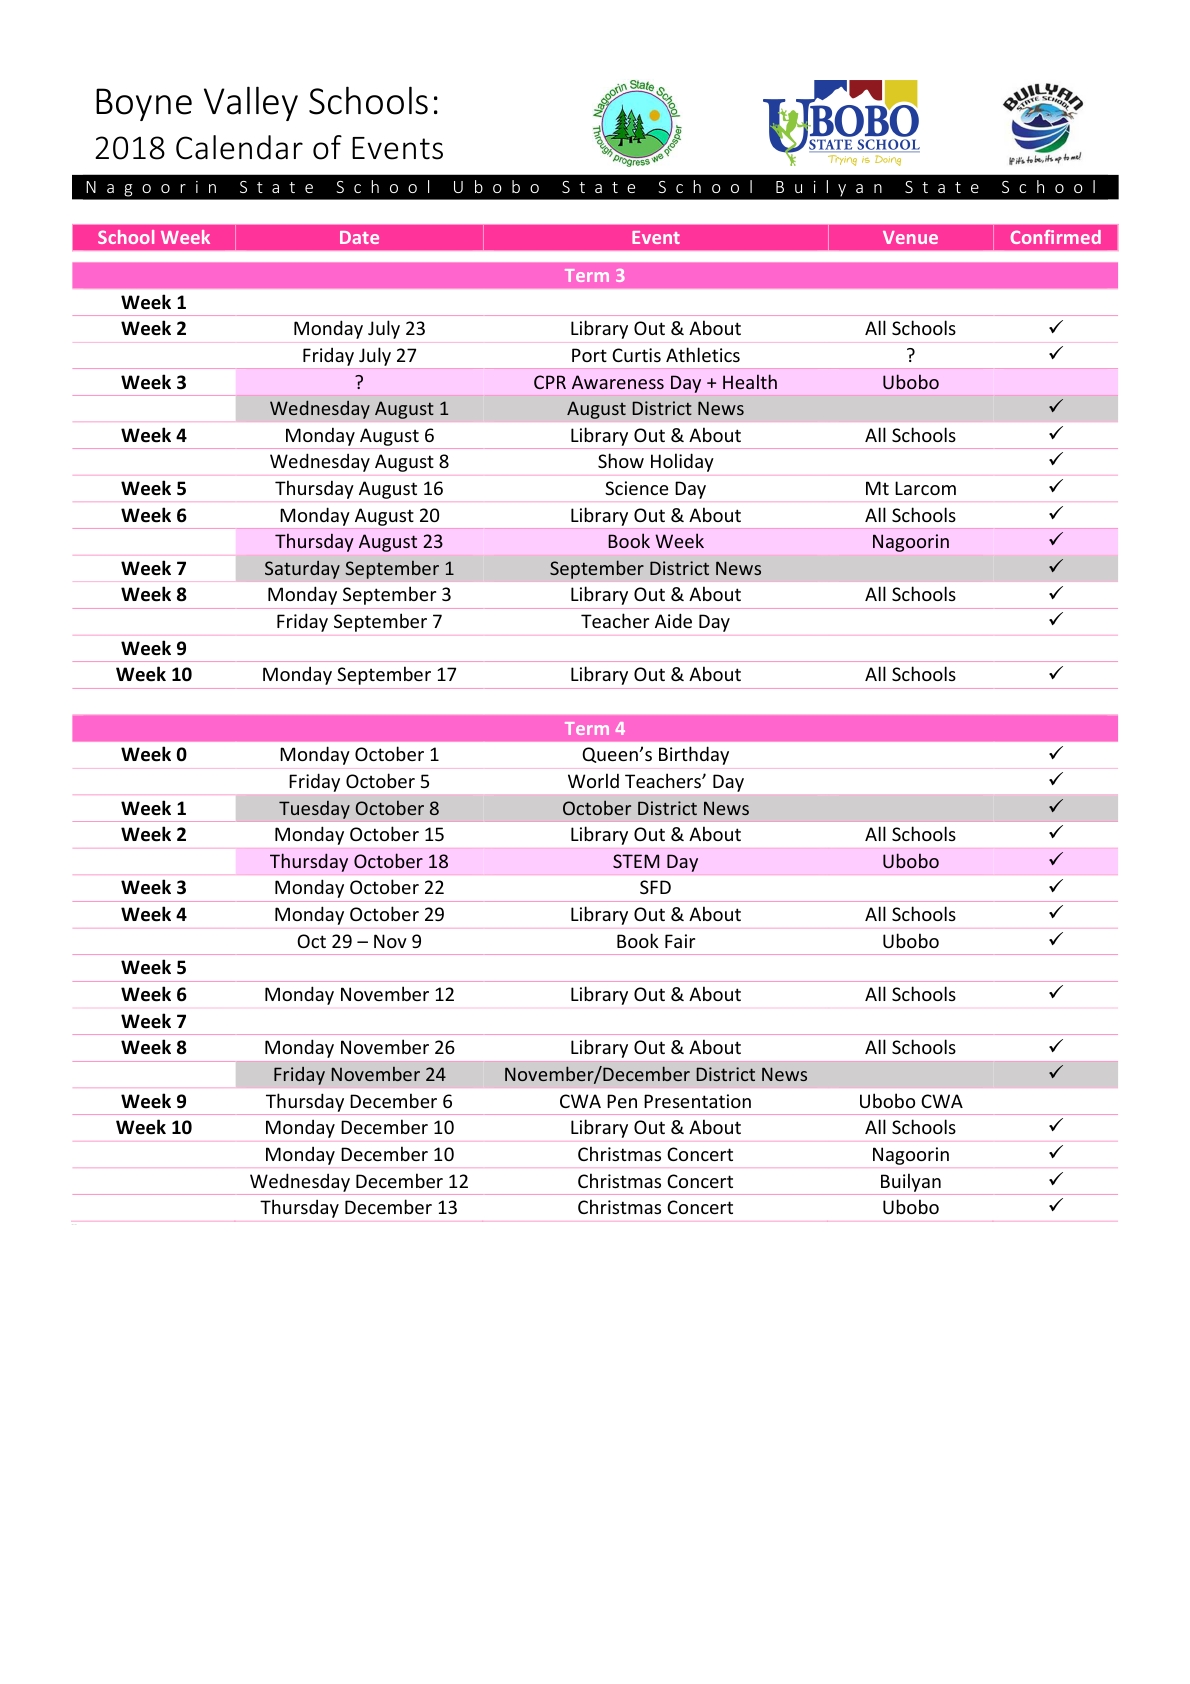 2018 Boyne Valley Schools Calendar of Events2.jpg